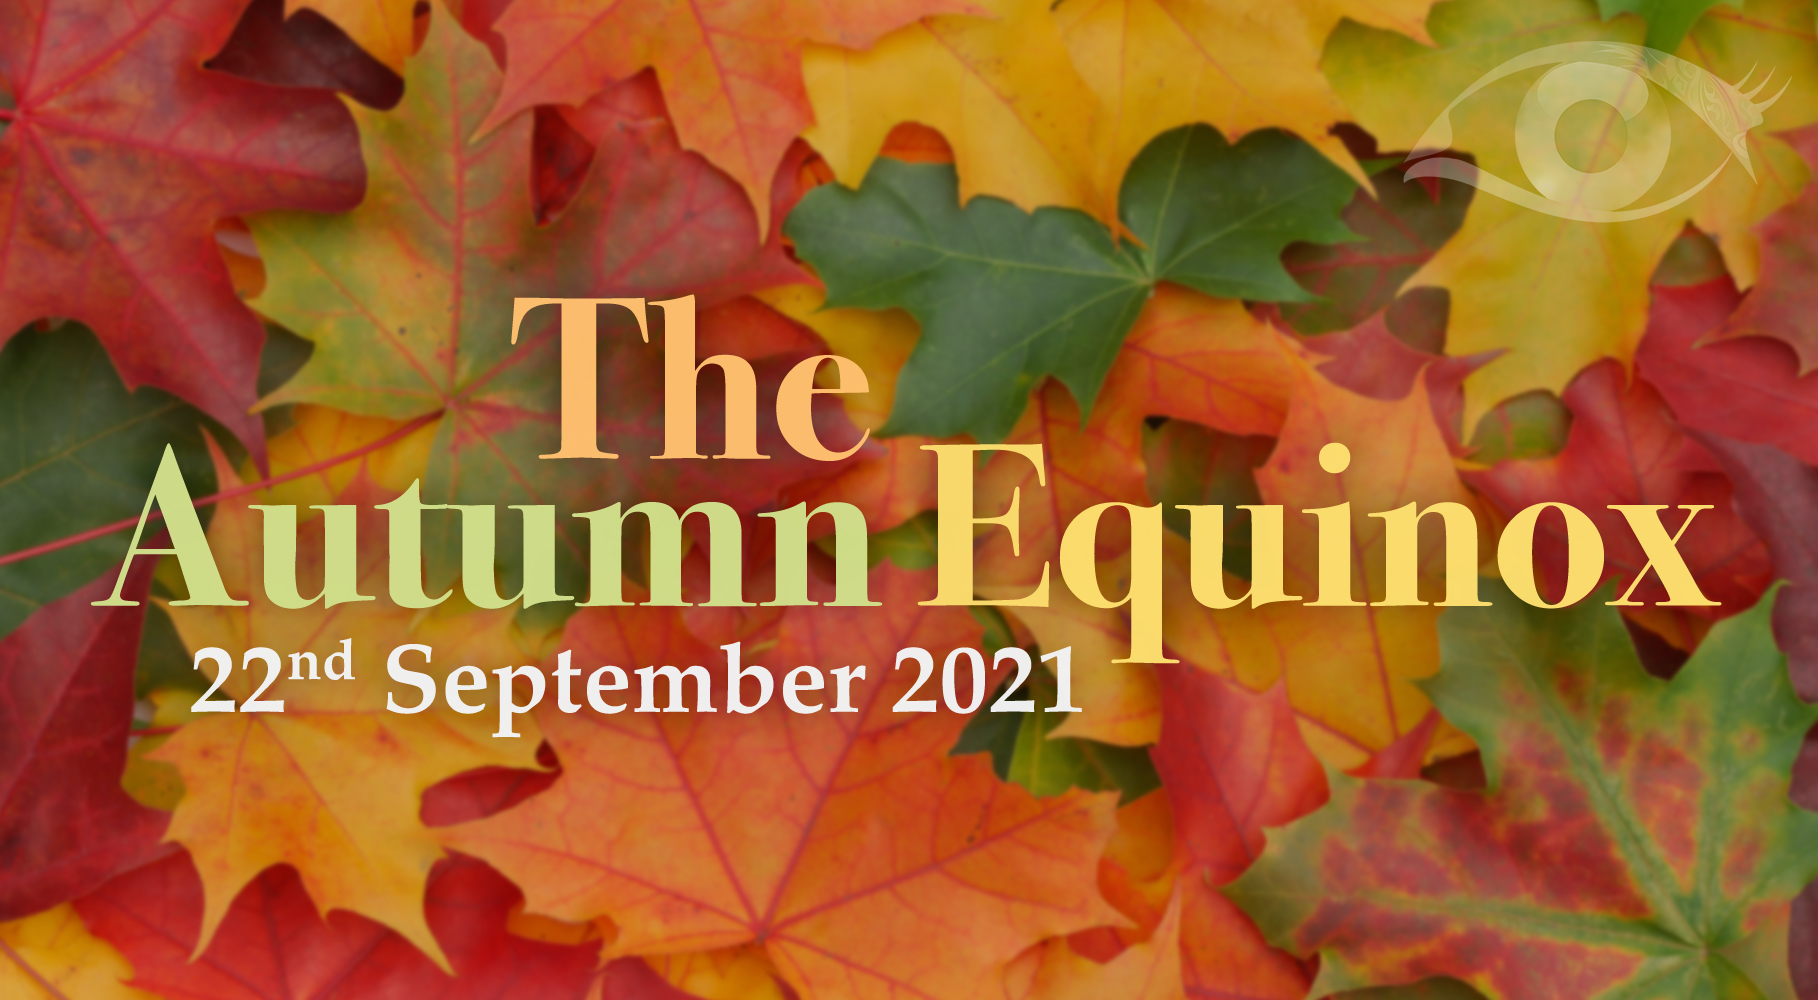 time autumnal equinox 2021